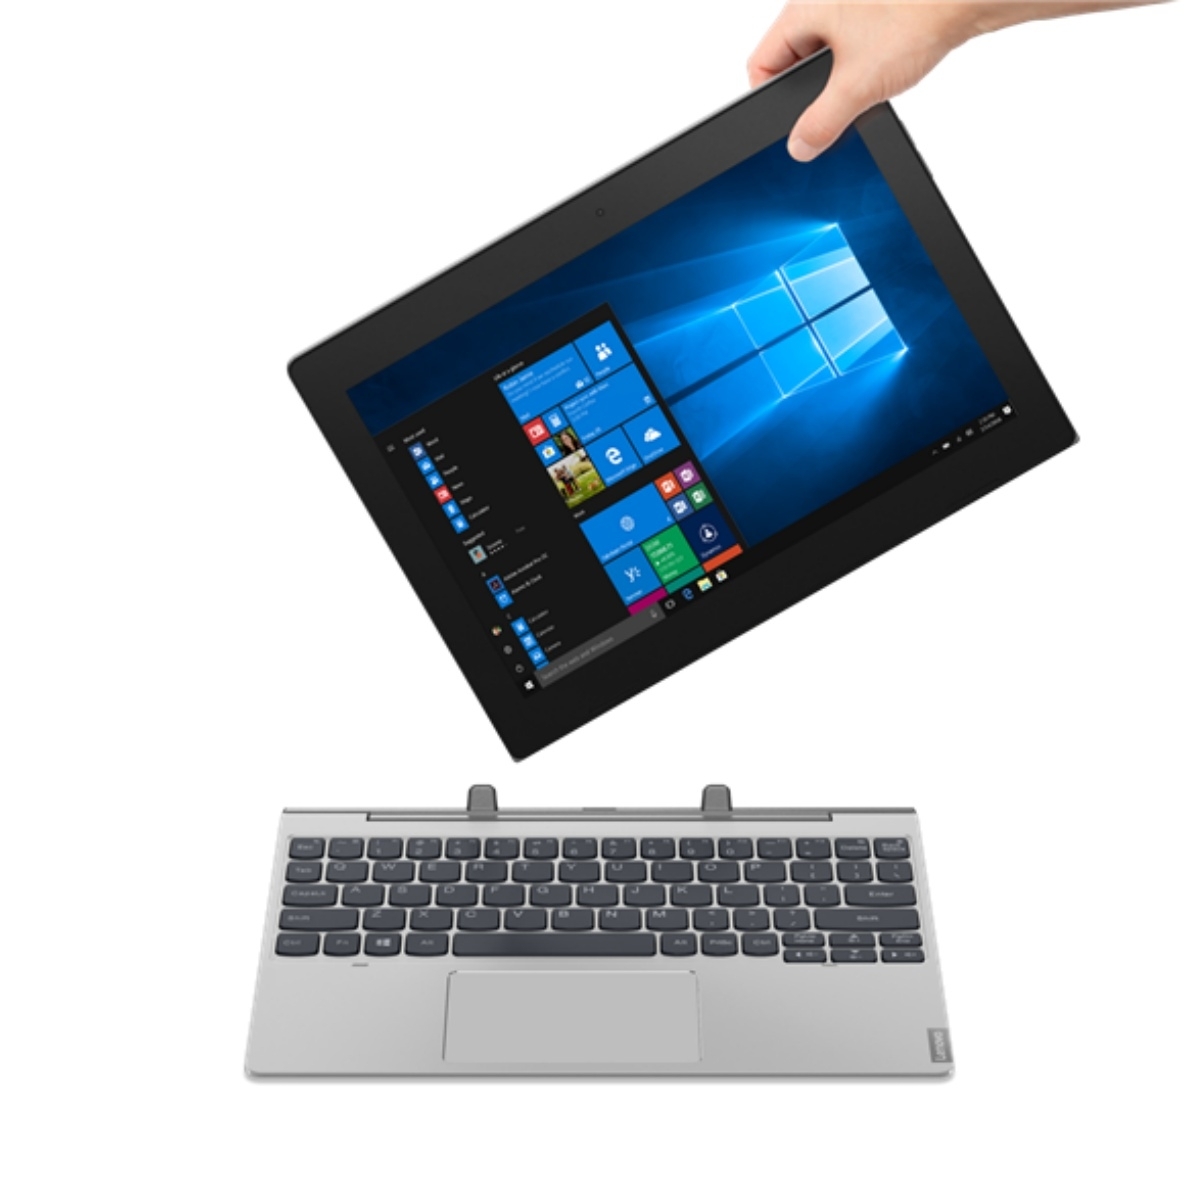 Tablet Lenovo Ideapad D330 10.1/N4020/4g/64gb7w10